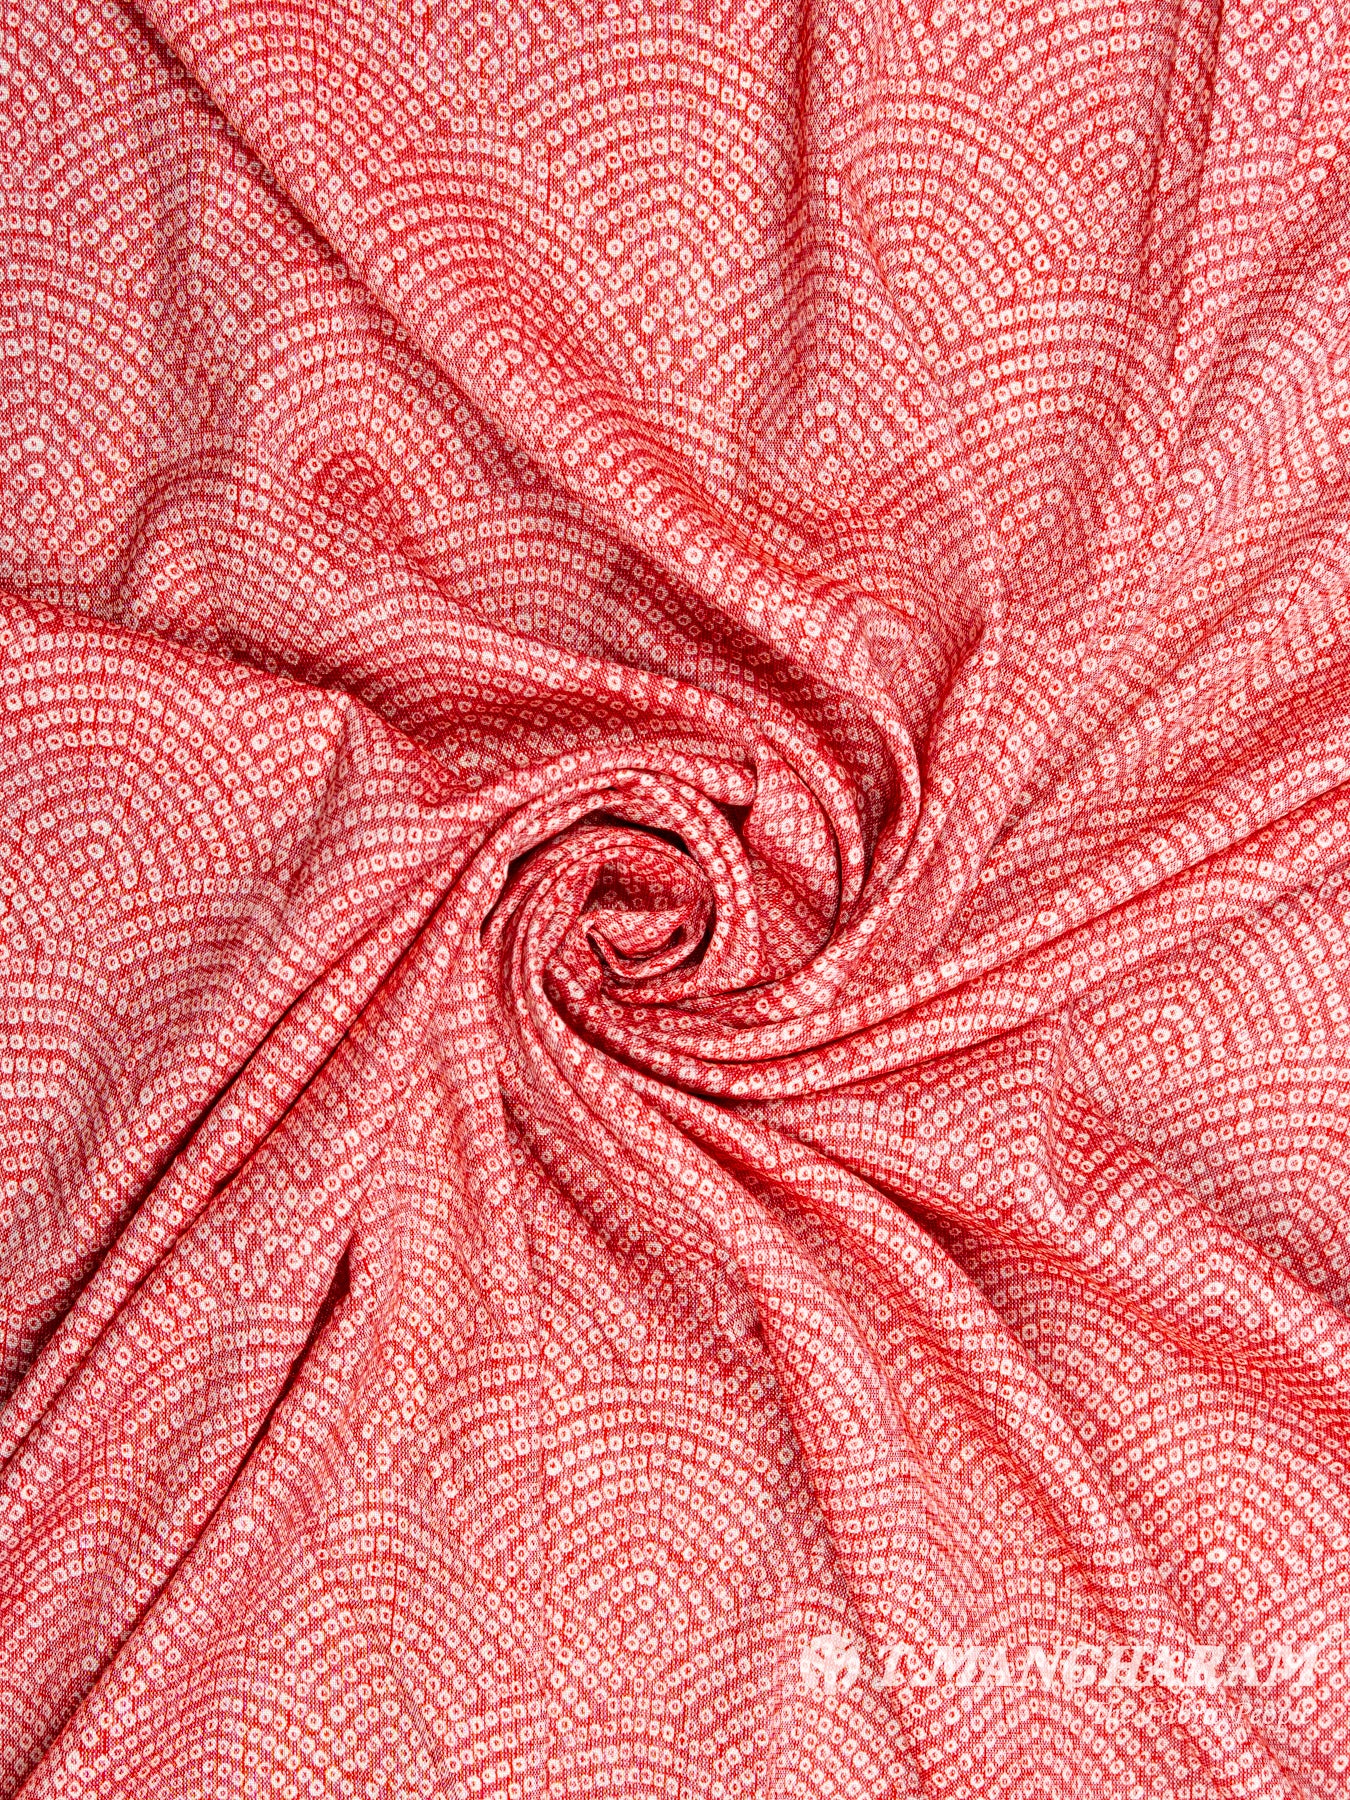 Peach Rayon Cotton Fabric - EC5356 view-1